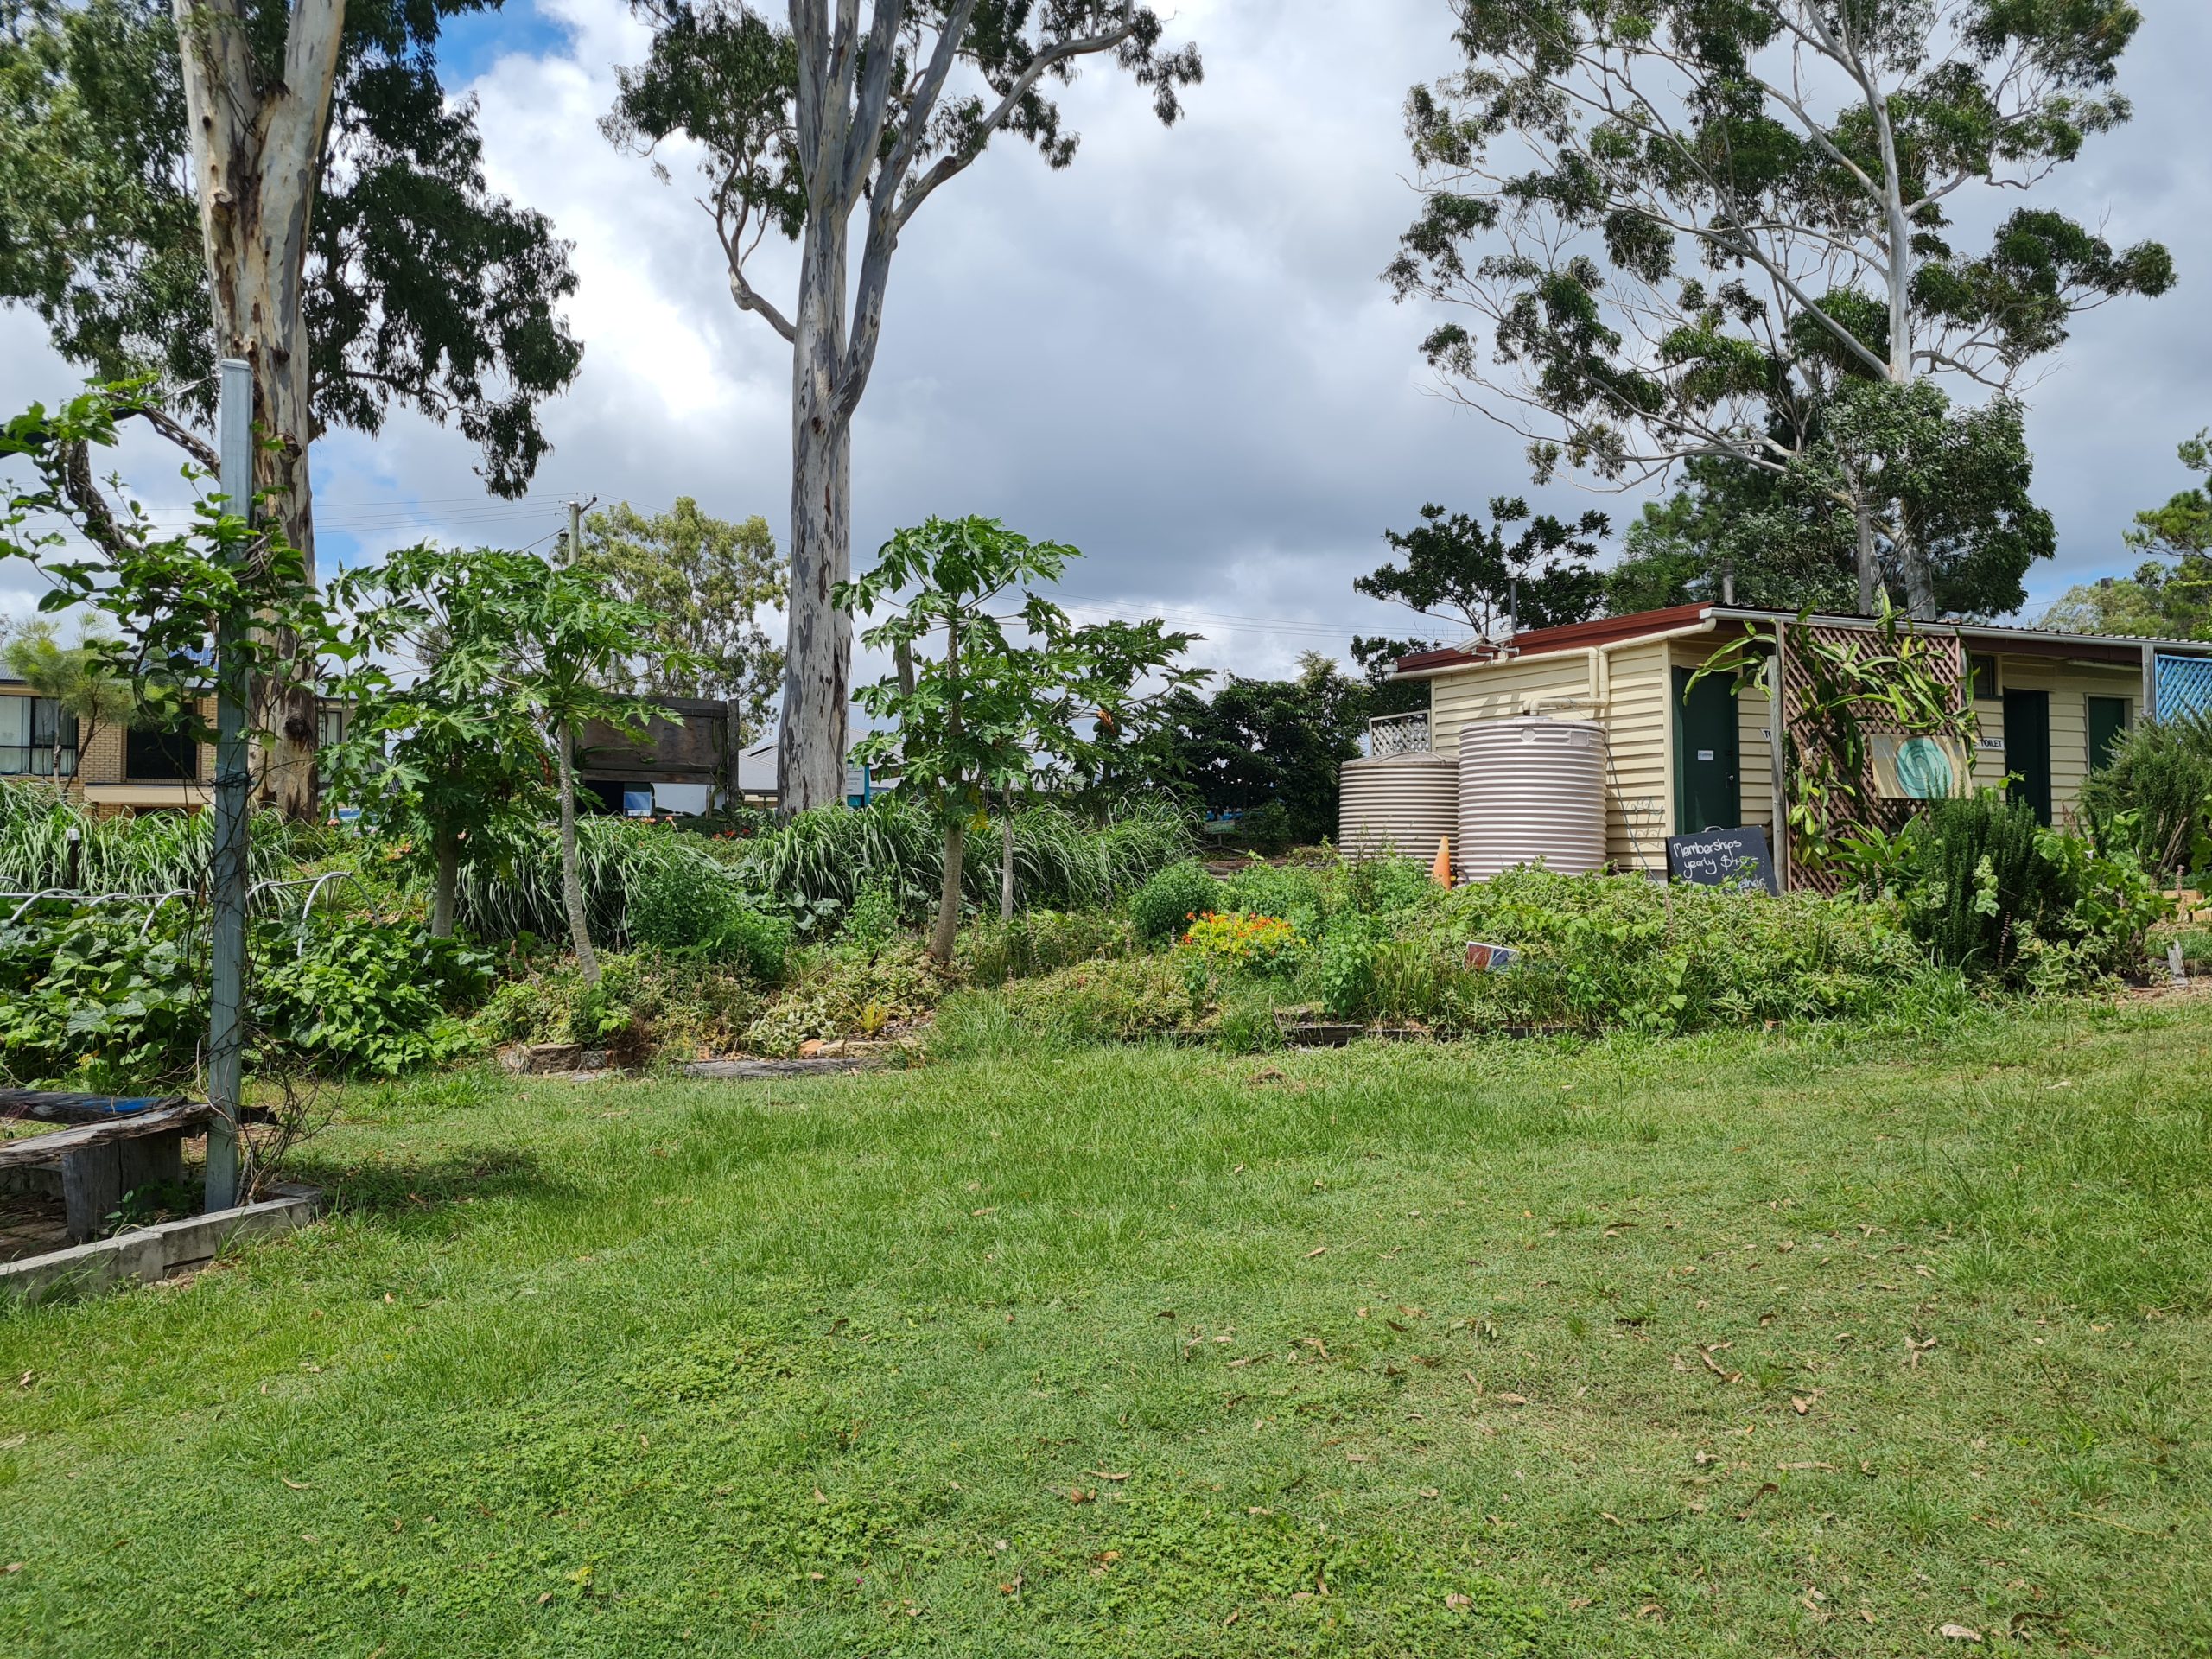 Gold Coast Community Gardens